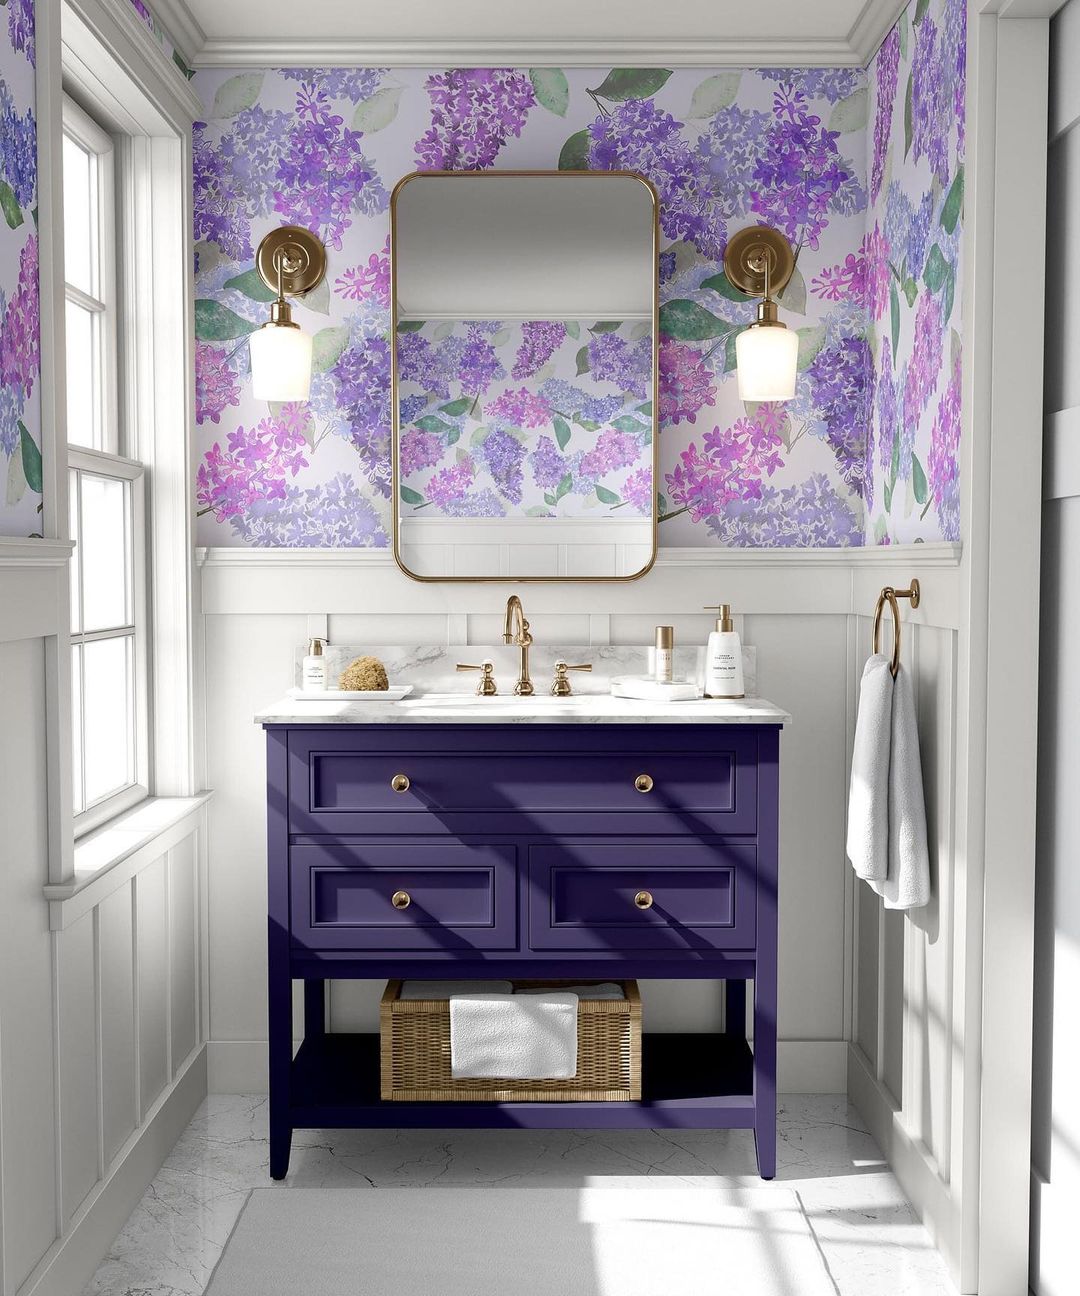 Eco-friendly floral pattern bathroom wallpaper. Photo by Instagram user @miurio_textiles